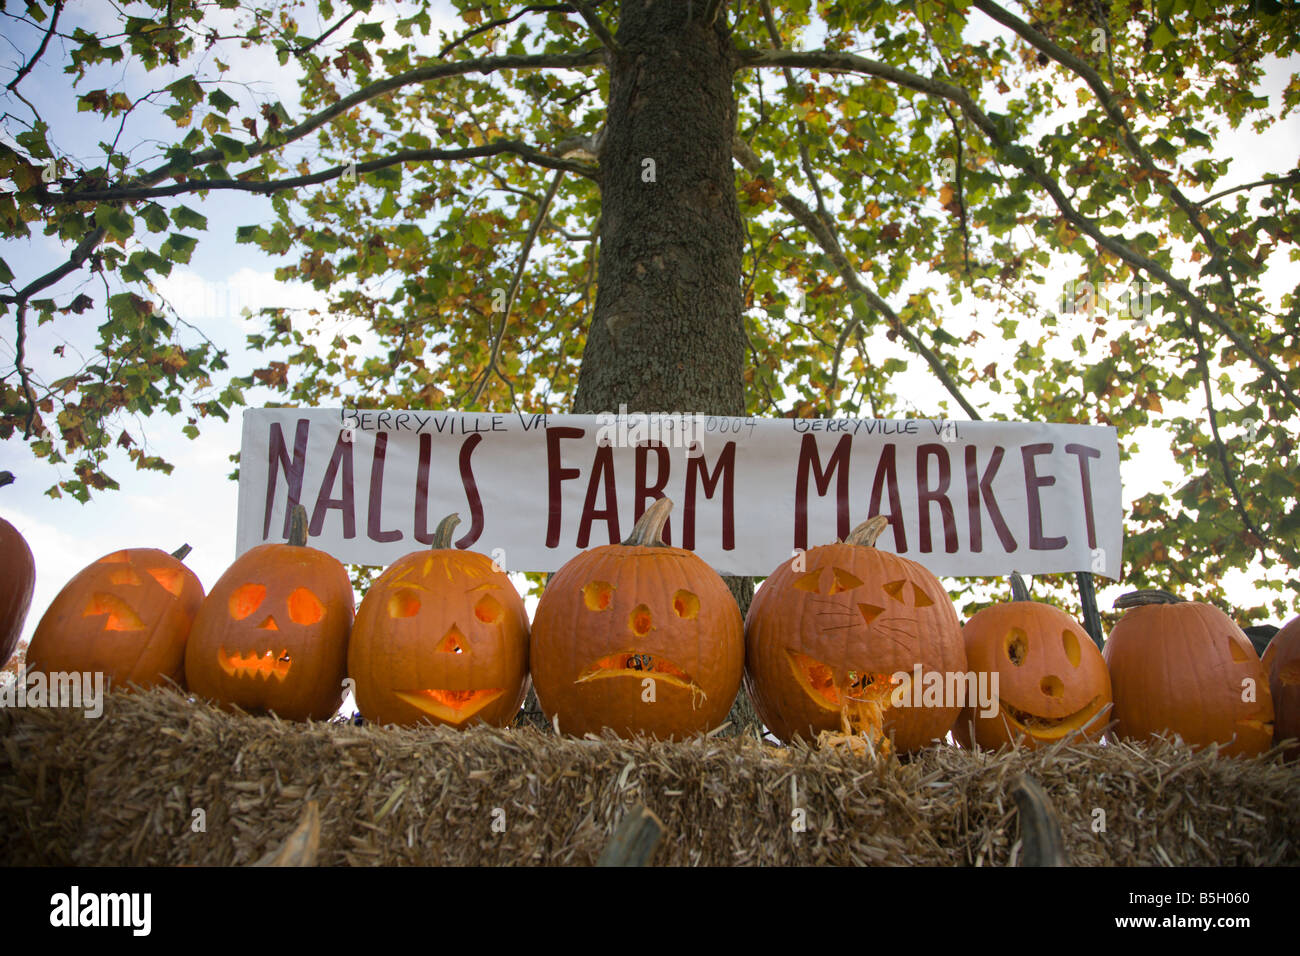 Nalls Farm Market pumpkin display at the 2008 Shenandoah Valley Hot Air Balloon and Wine Festival in Millwood, Virginia. Stock Photo